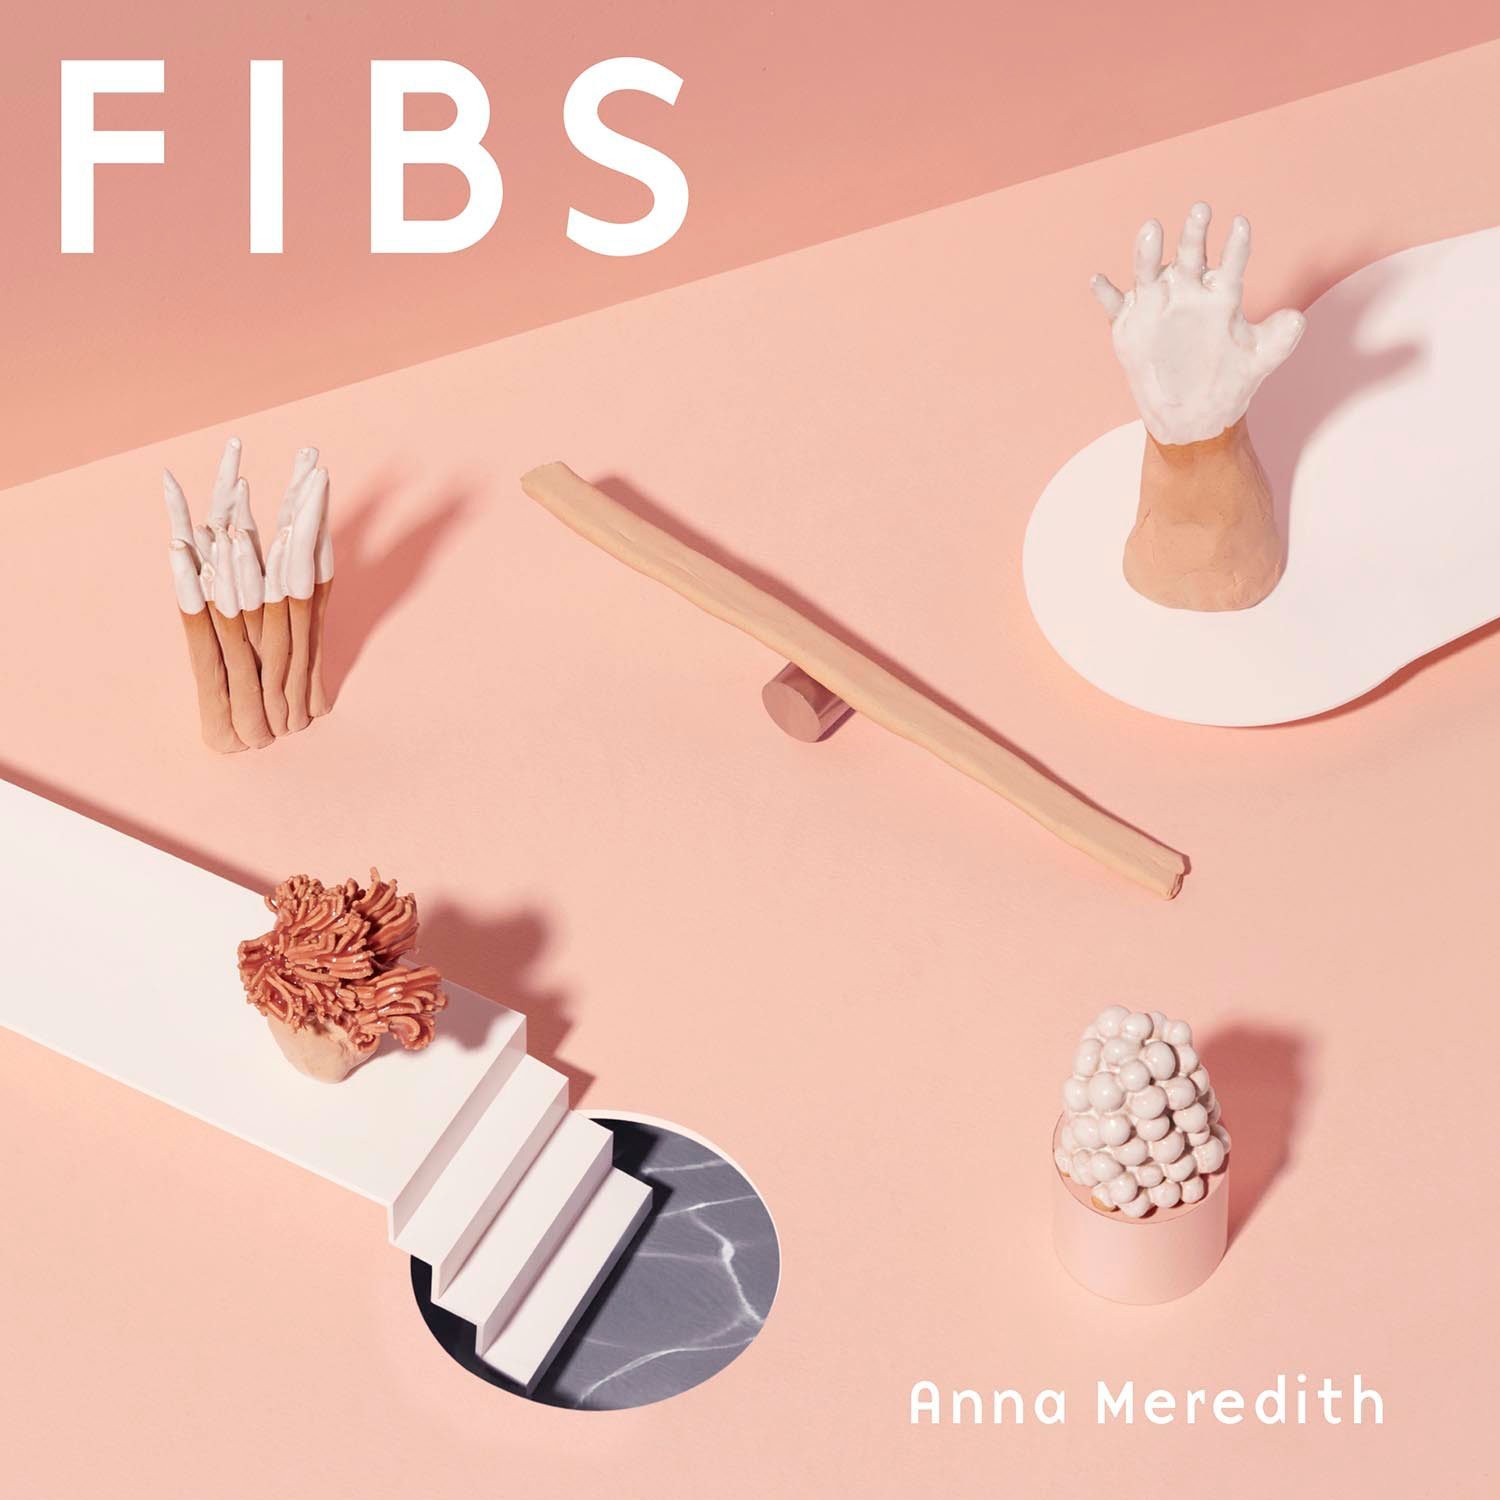 ALBUM REVIEW: Anna Meredith - FIBS 